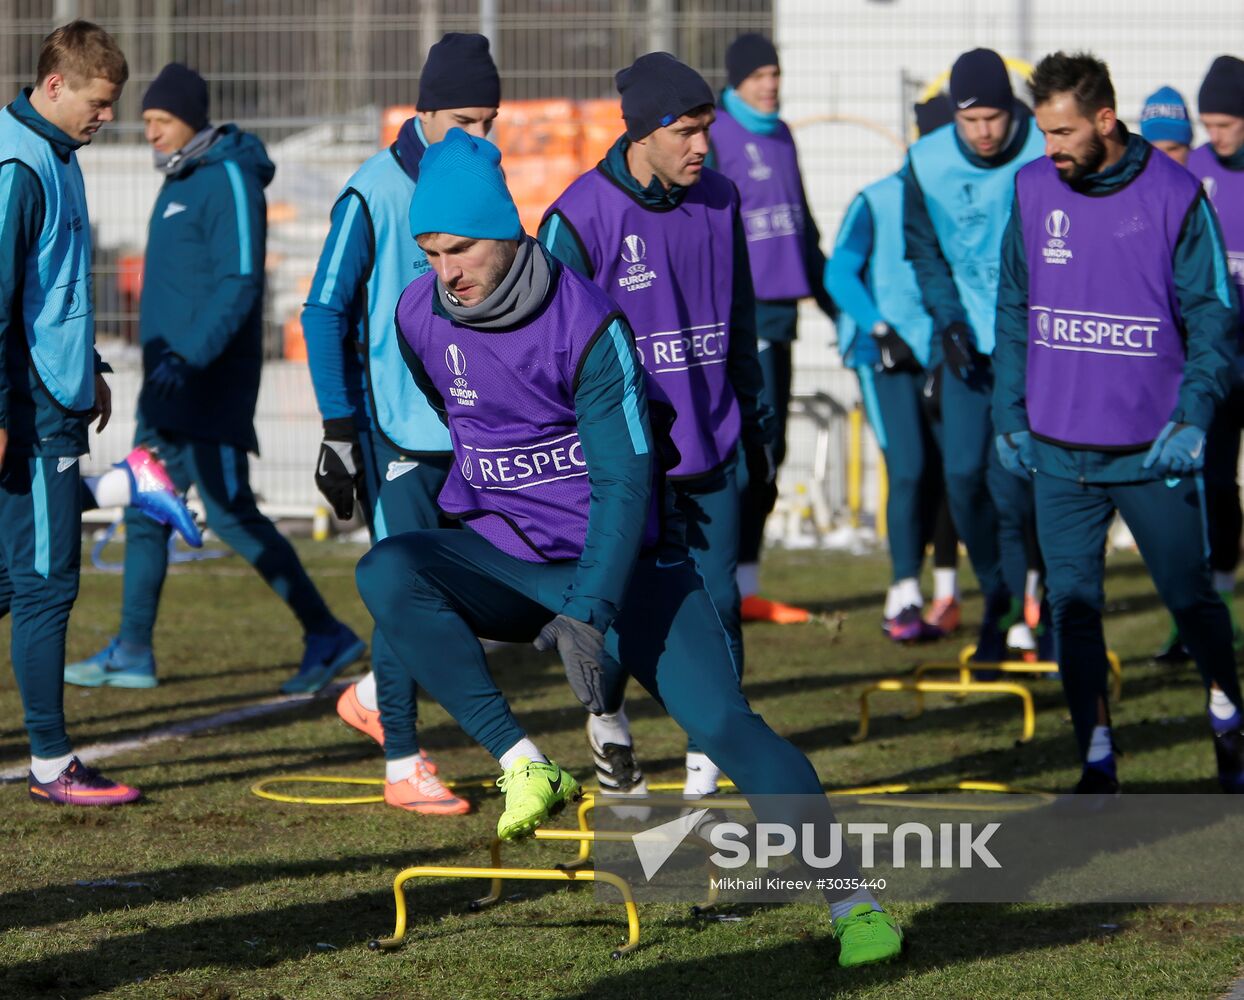 UEFA Europa League. FC Zenit holds training session